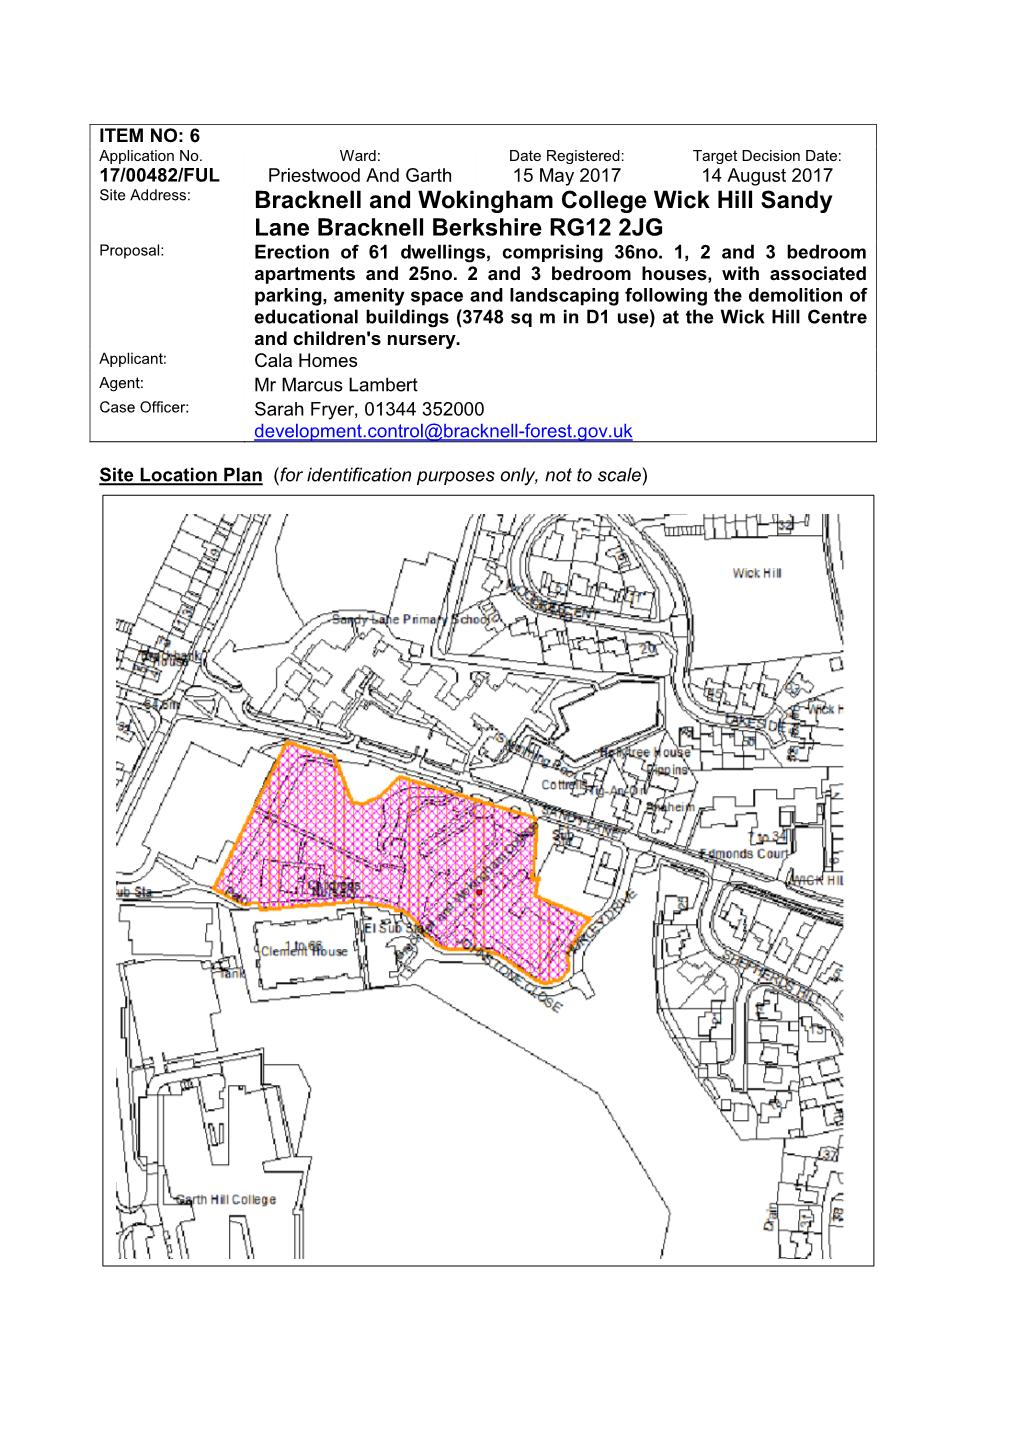 Bracknell and Wokingham College Wick Hill Sandy Lane Bracknell Berkshire RG12 2JG Proposal: Erection of 61 Dwellings, Comprising 36No